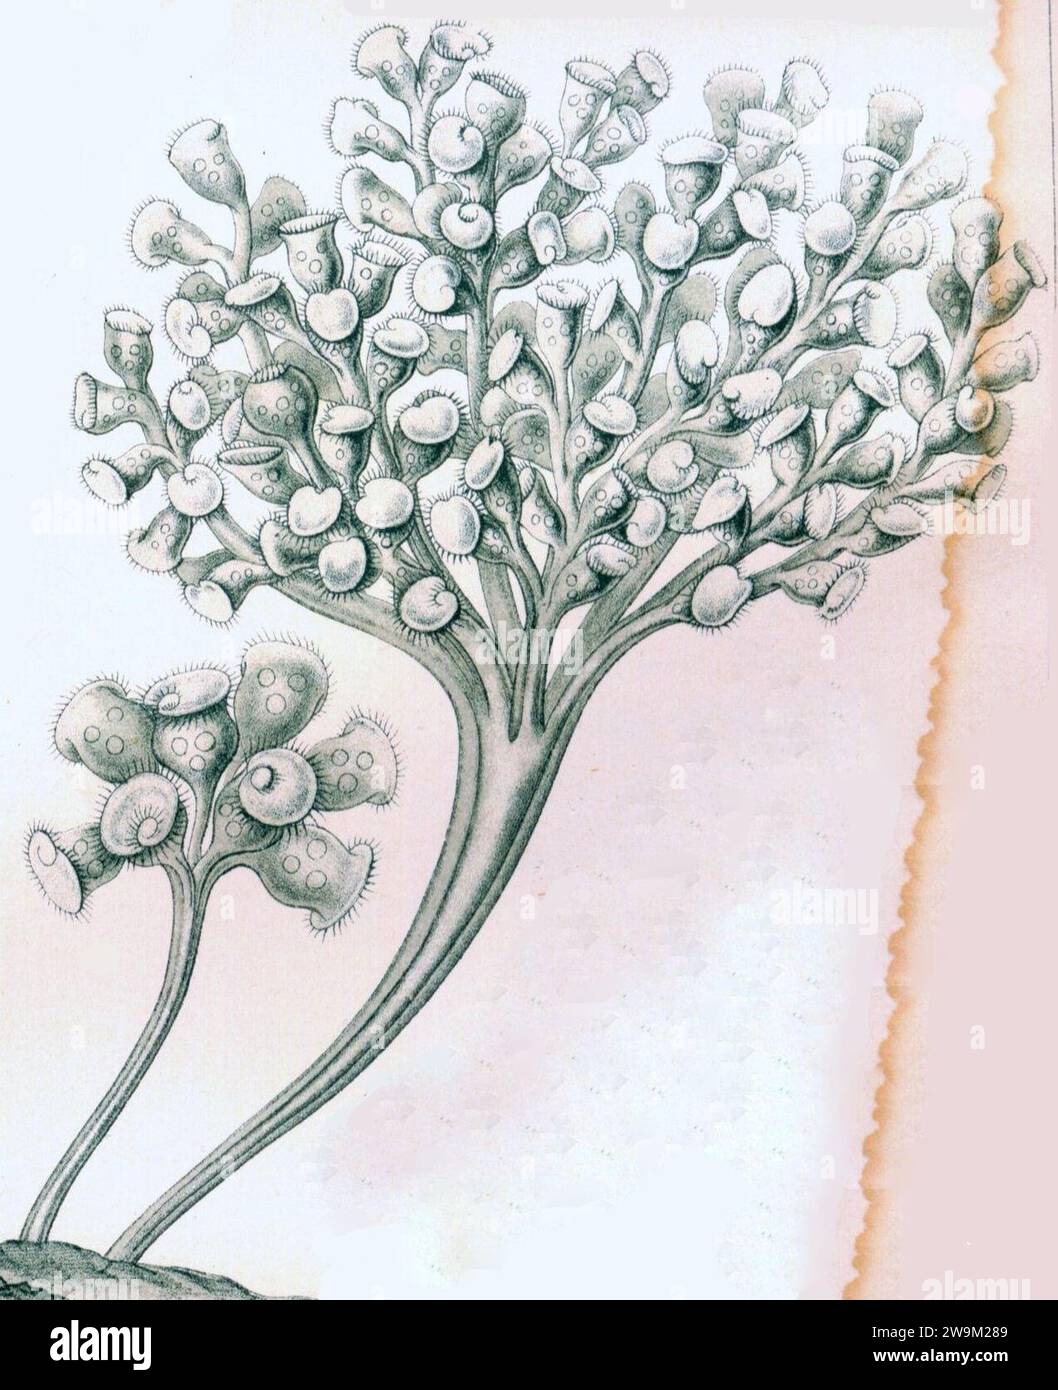 Zoothamnium arbuscula. Stock Photo